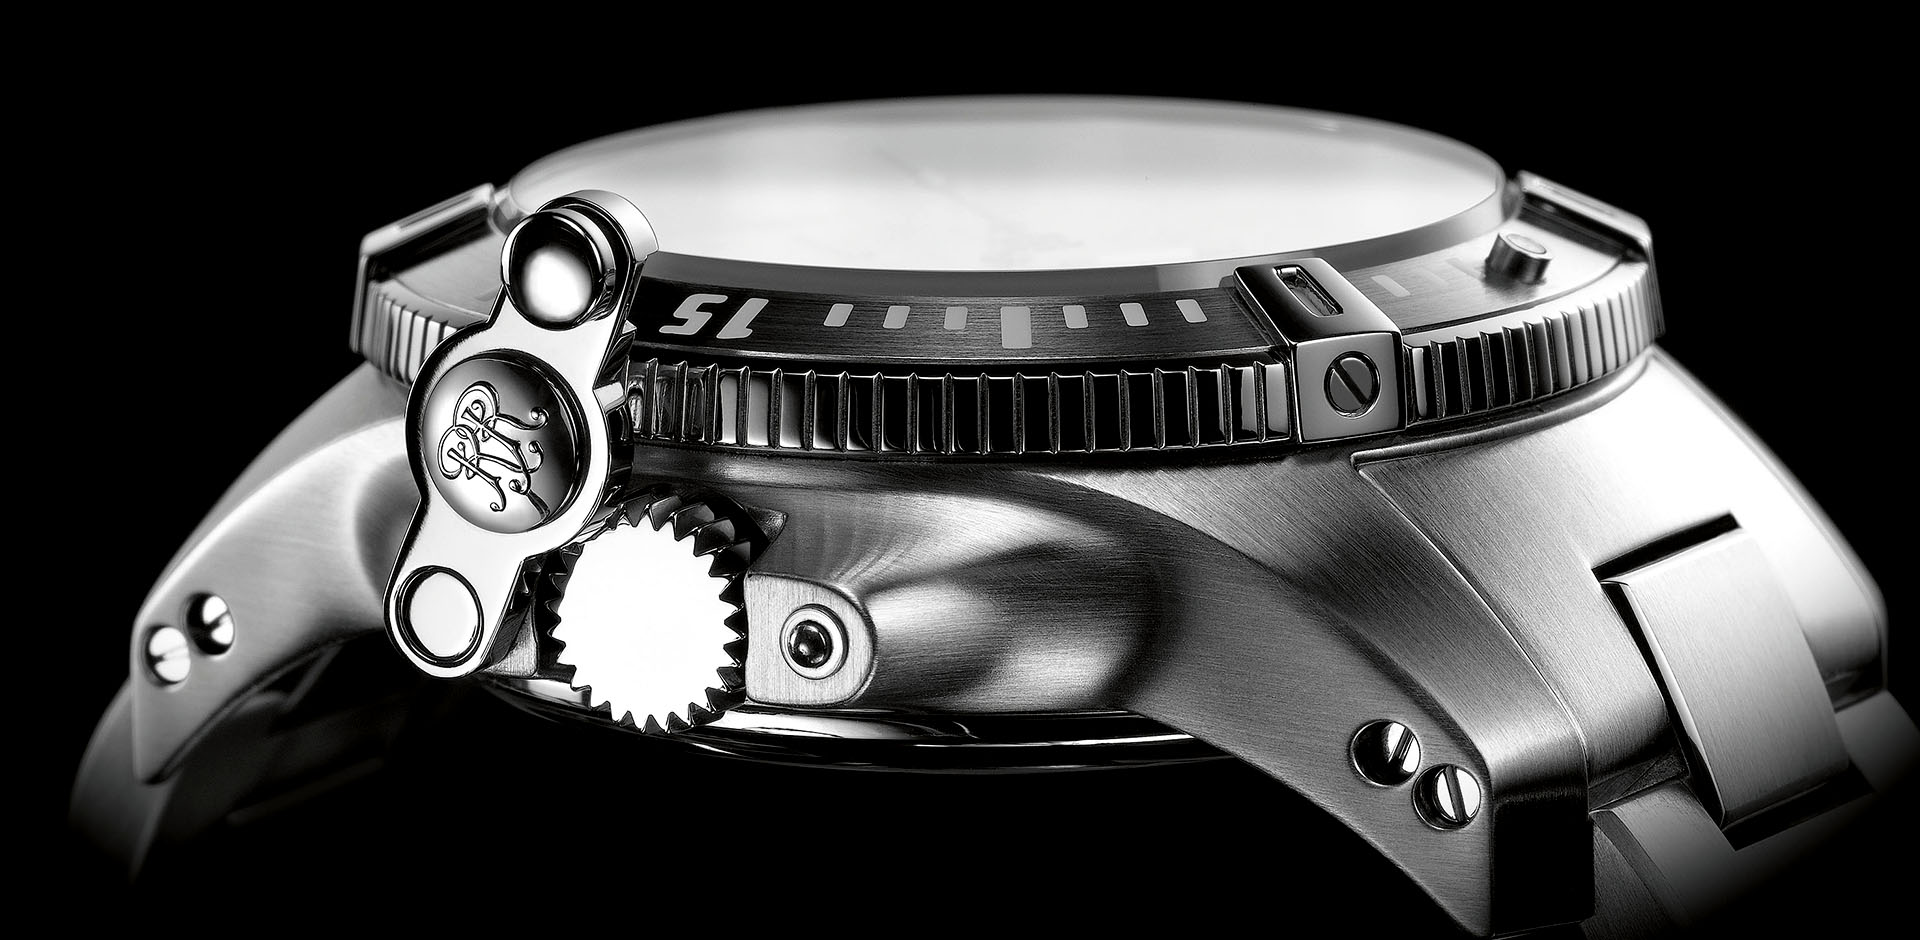 Replica Swiss Watches Usa